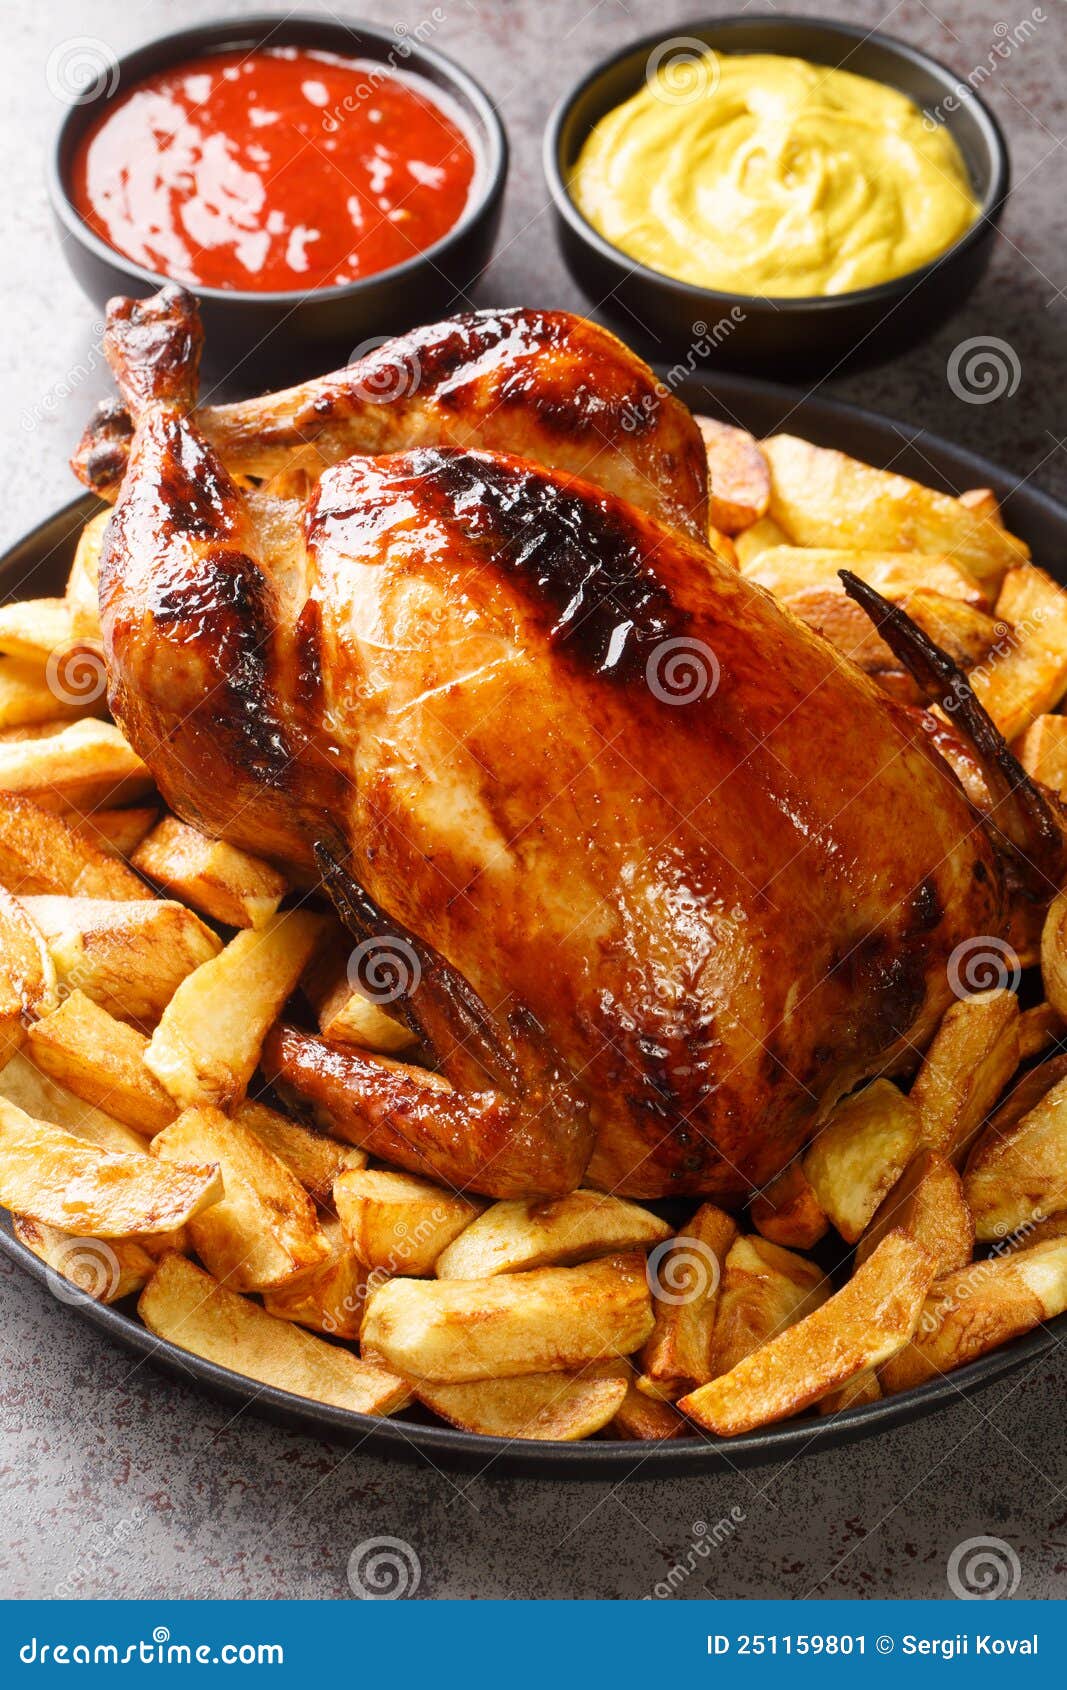 pollo a la brasa peruvian roast chicken with fried potato and sauces closeup in the plate. vertical